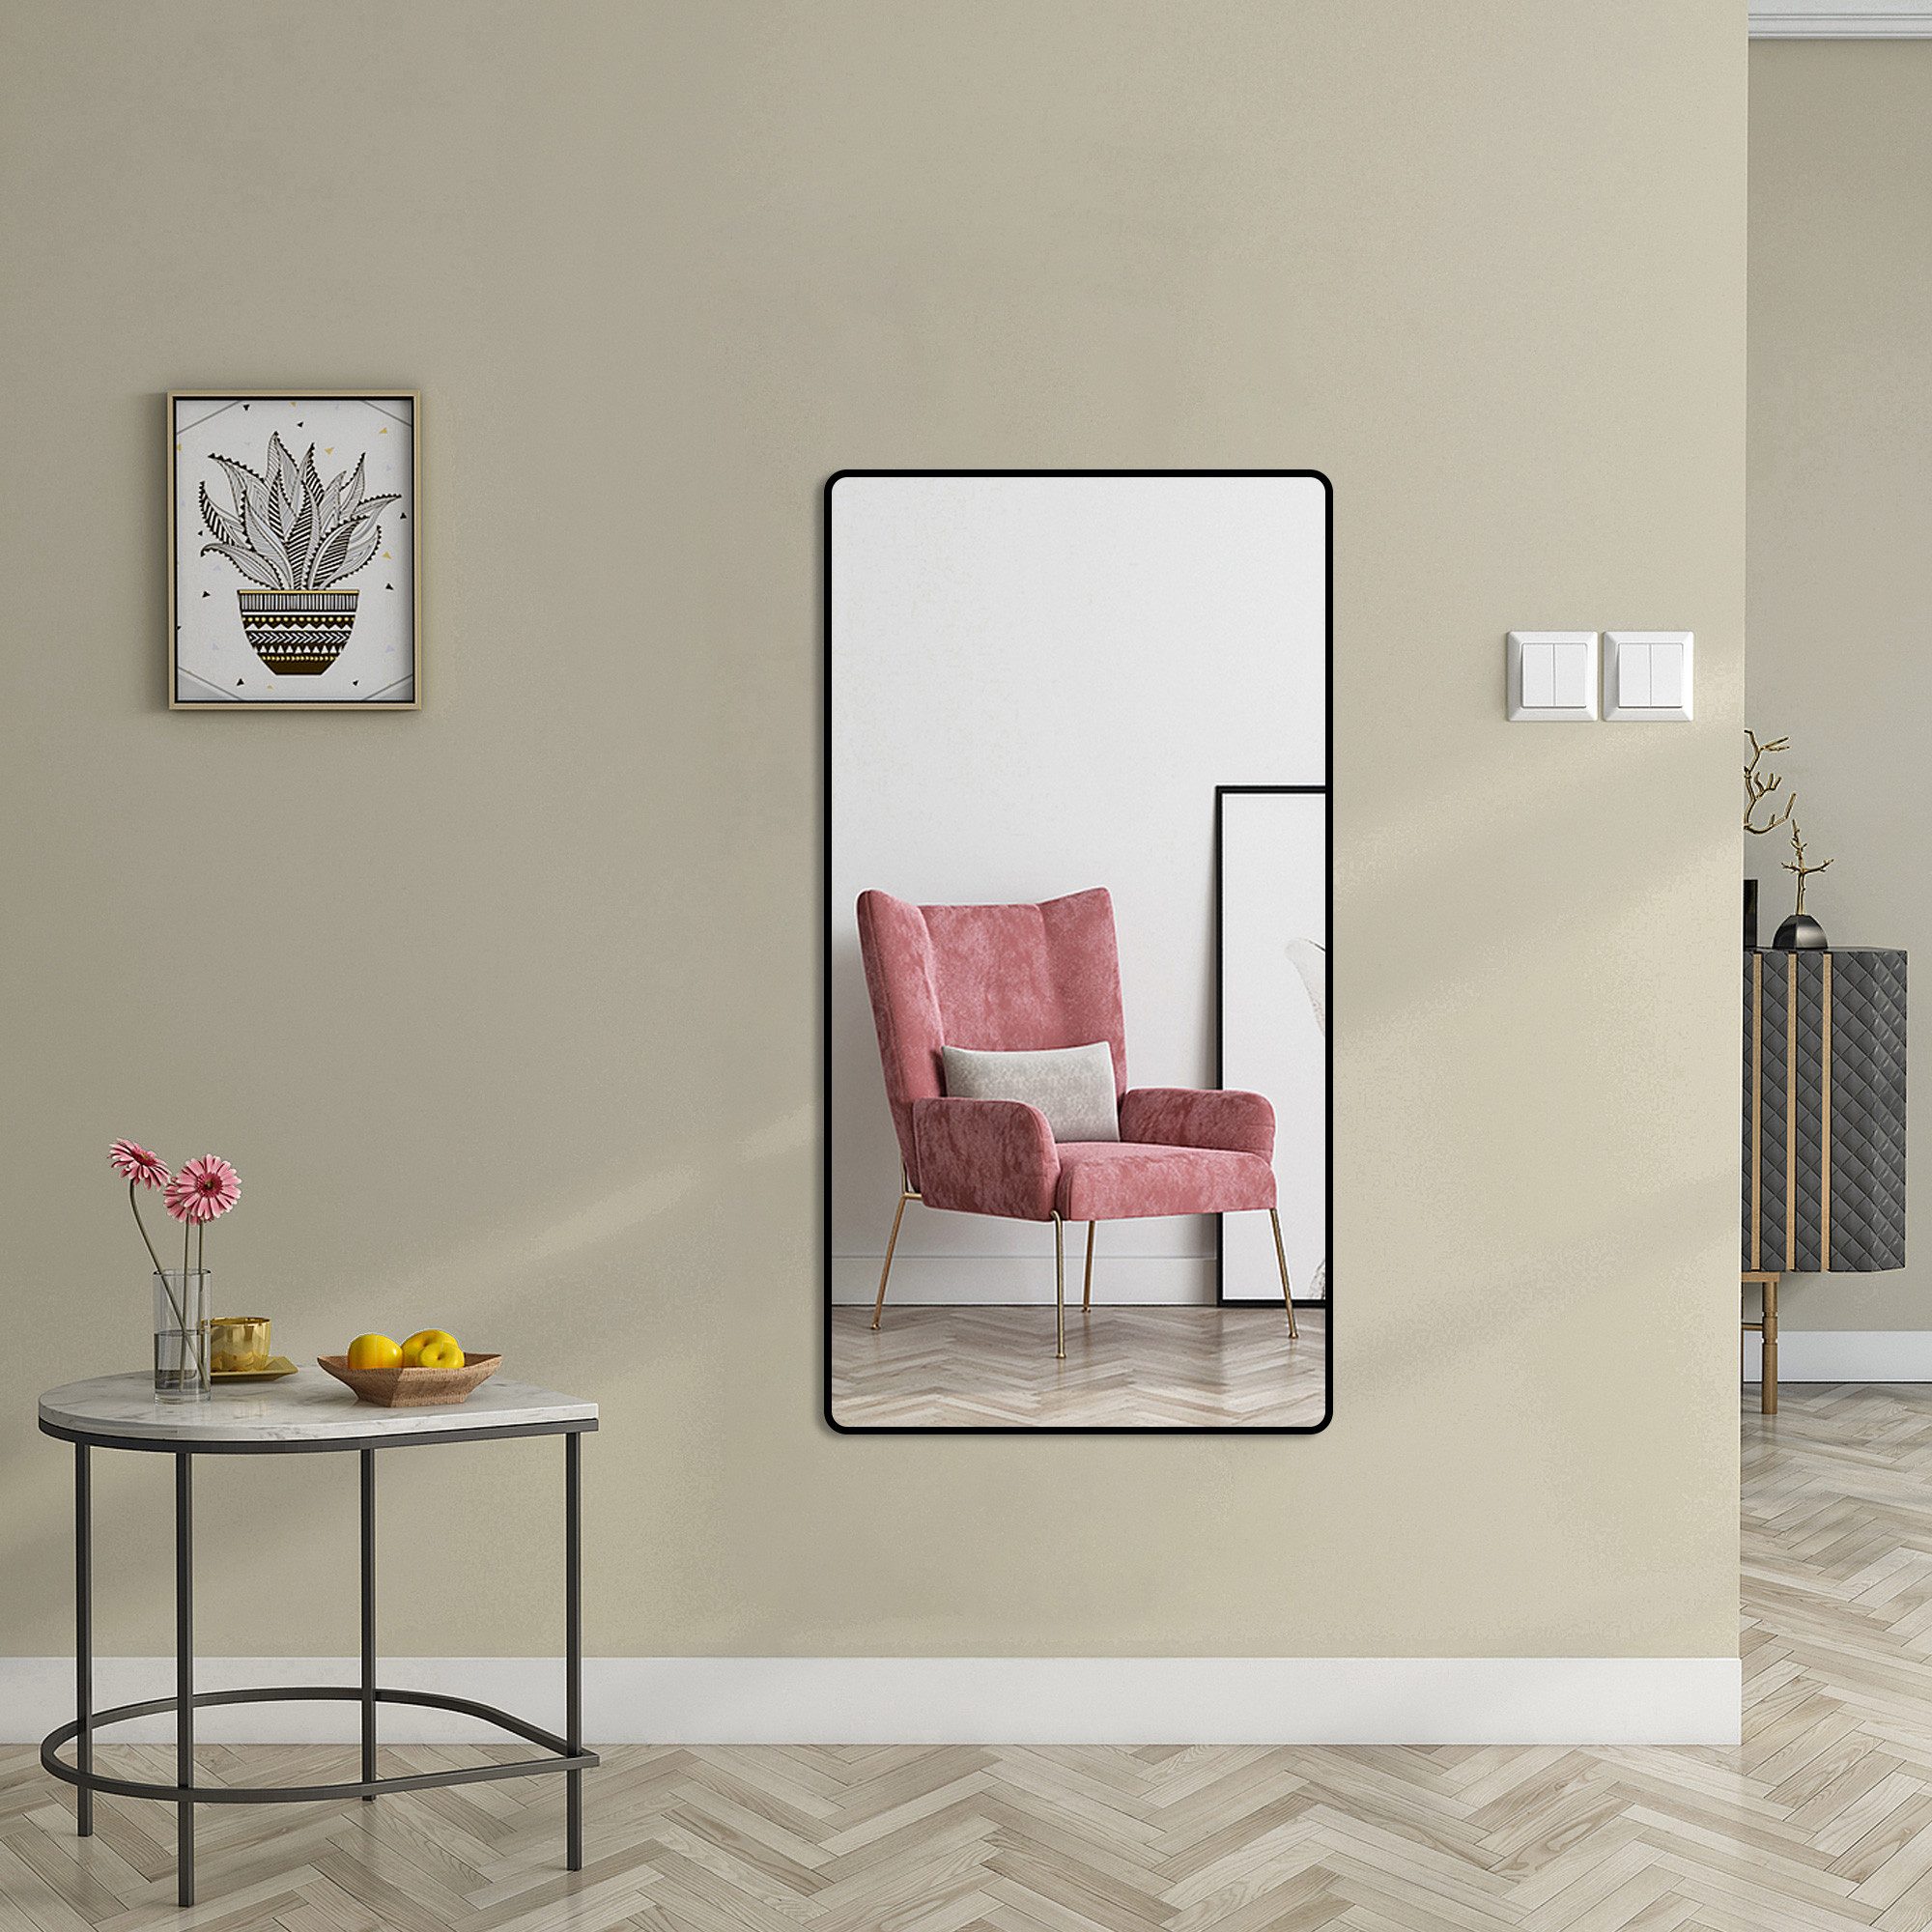 Boromal Ganzkörperspiegel 120x70 100x70 Spiegel Flur Wand groß (Wandspiegel gross, 5mm HD Glas, mit Alurahmen), Umweltschutz, Explosionsgeschutz